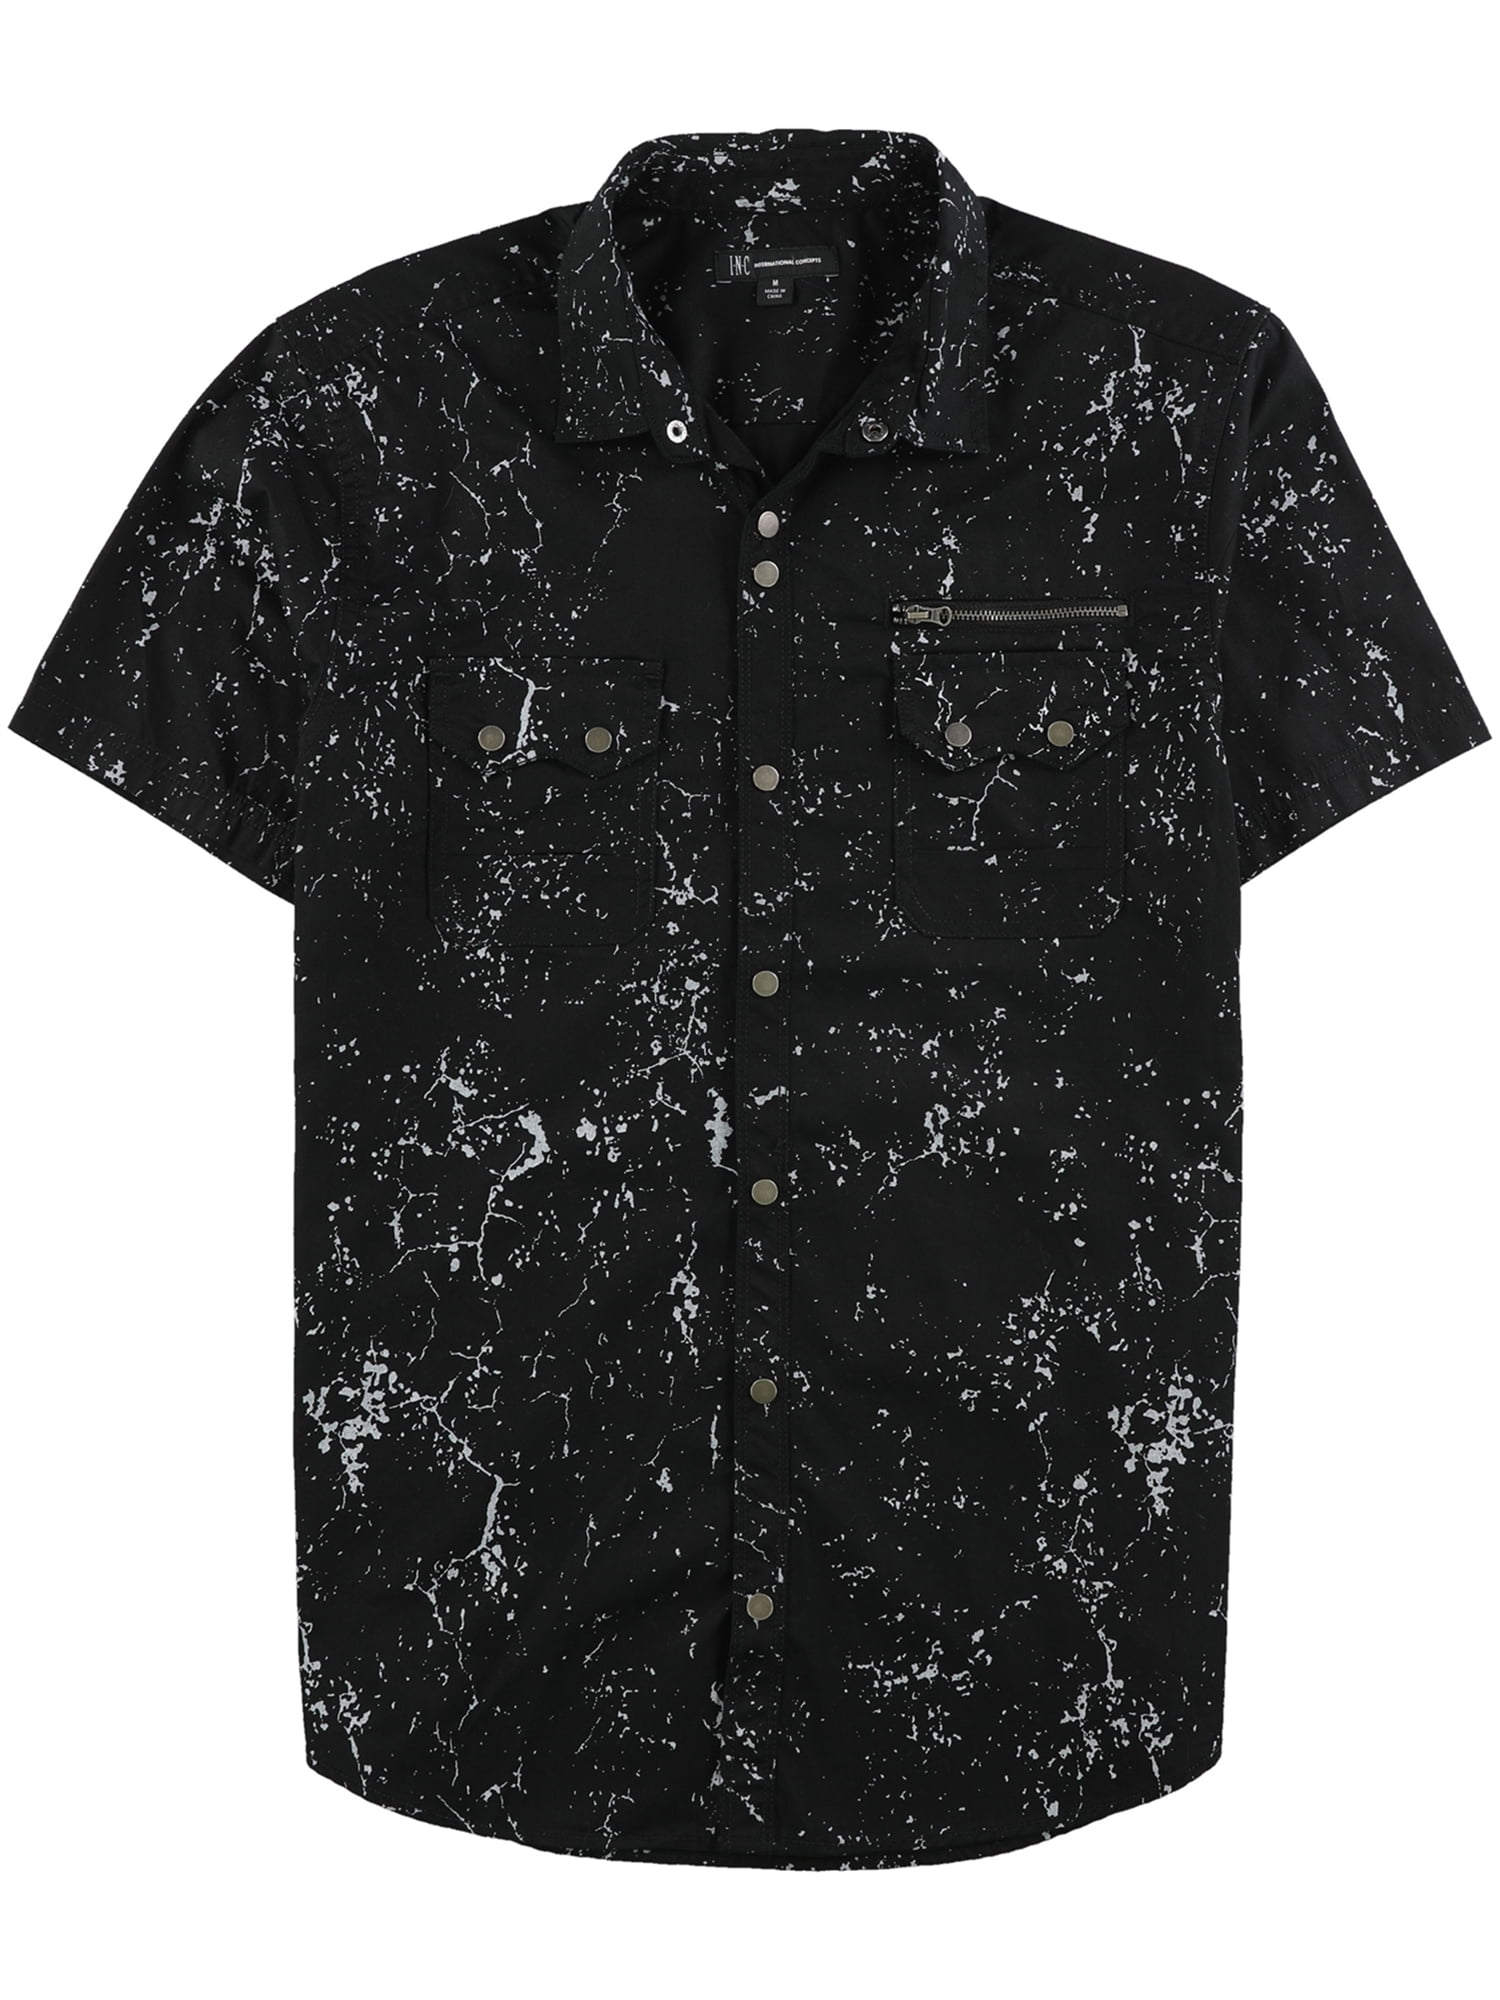 I-N-C Mens Splatter Button Up Shirt black M | Walmart Canada